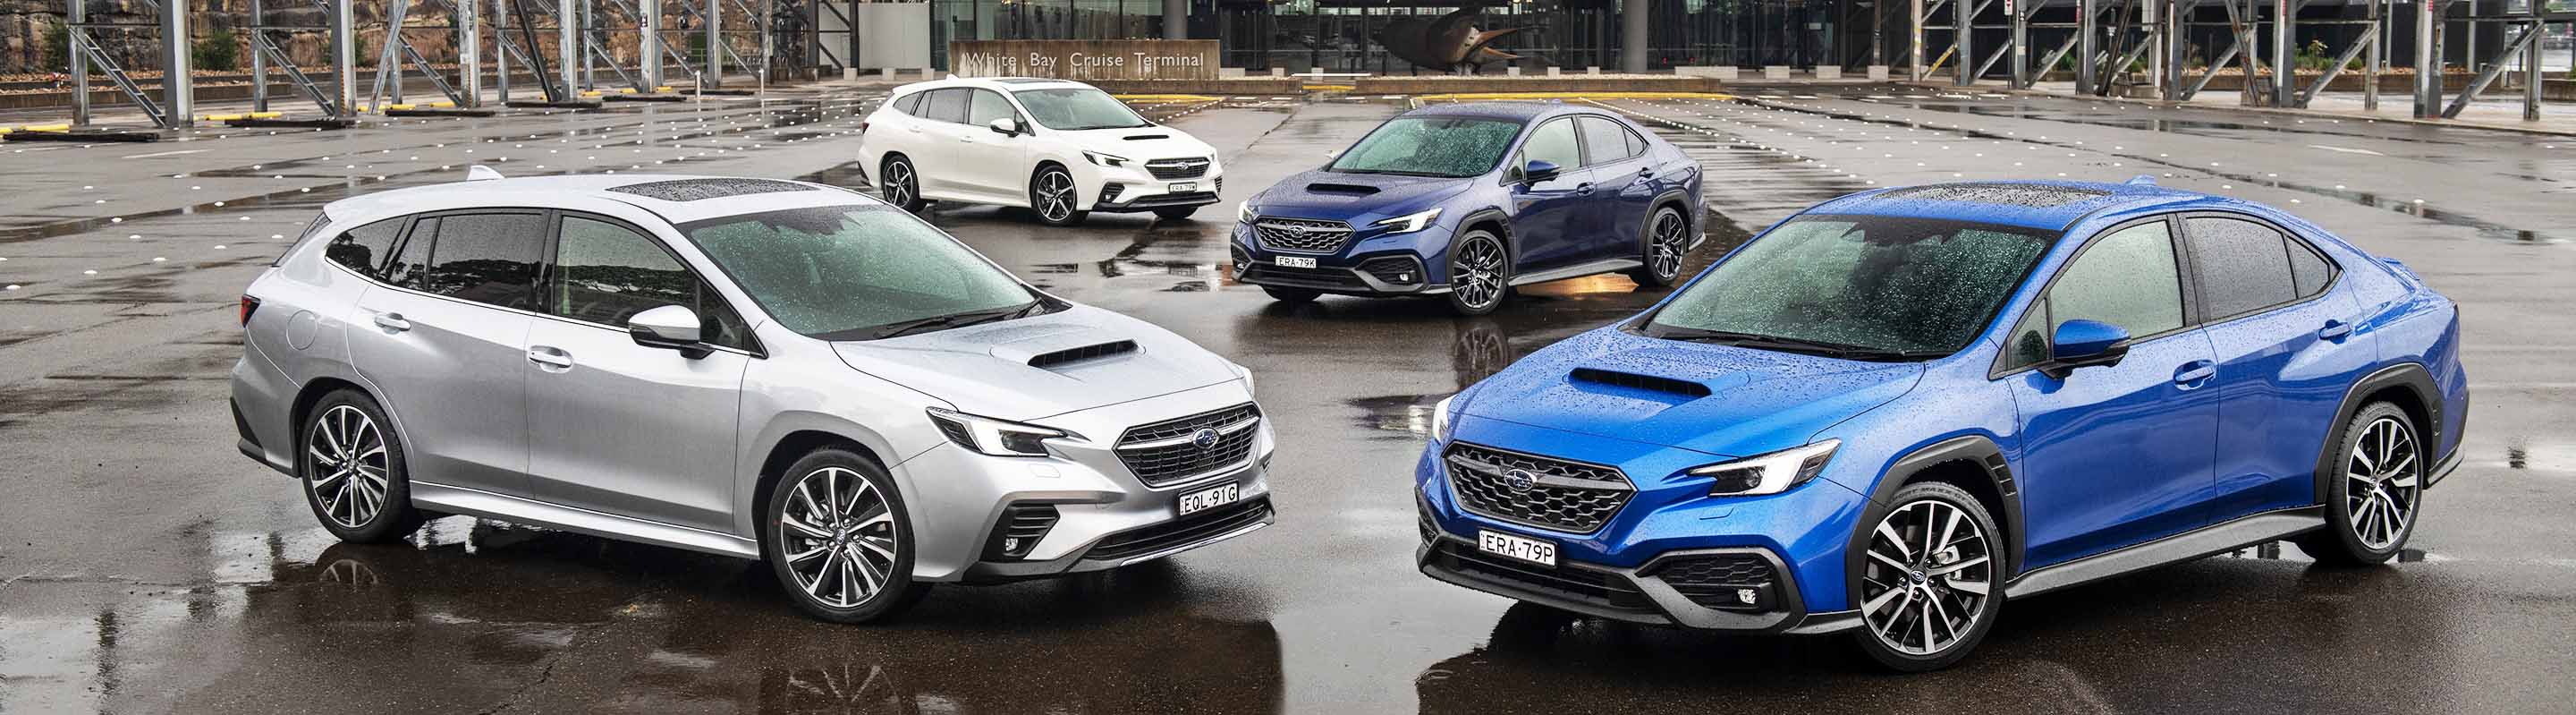 WRX-hilaration: Subaru launches its all-new WRX range